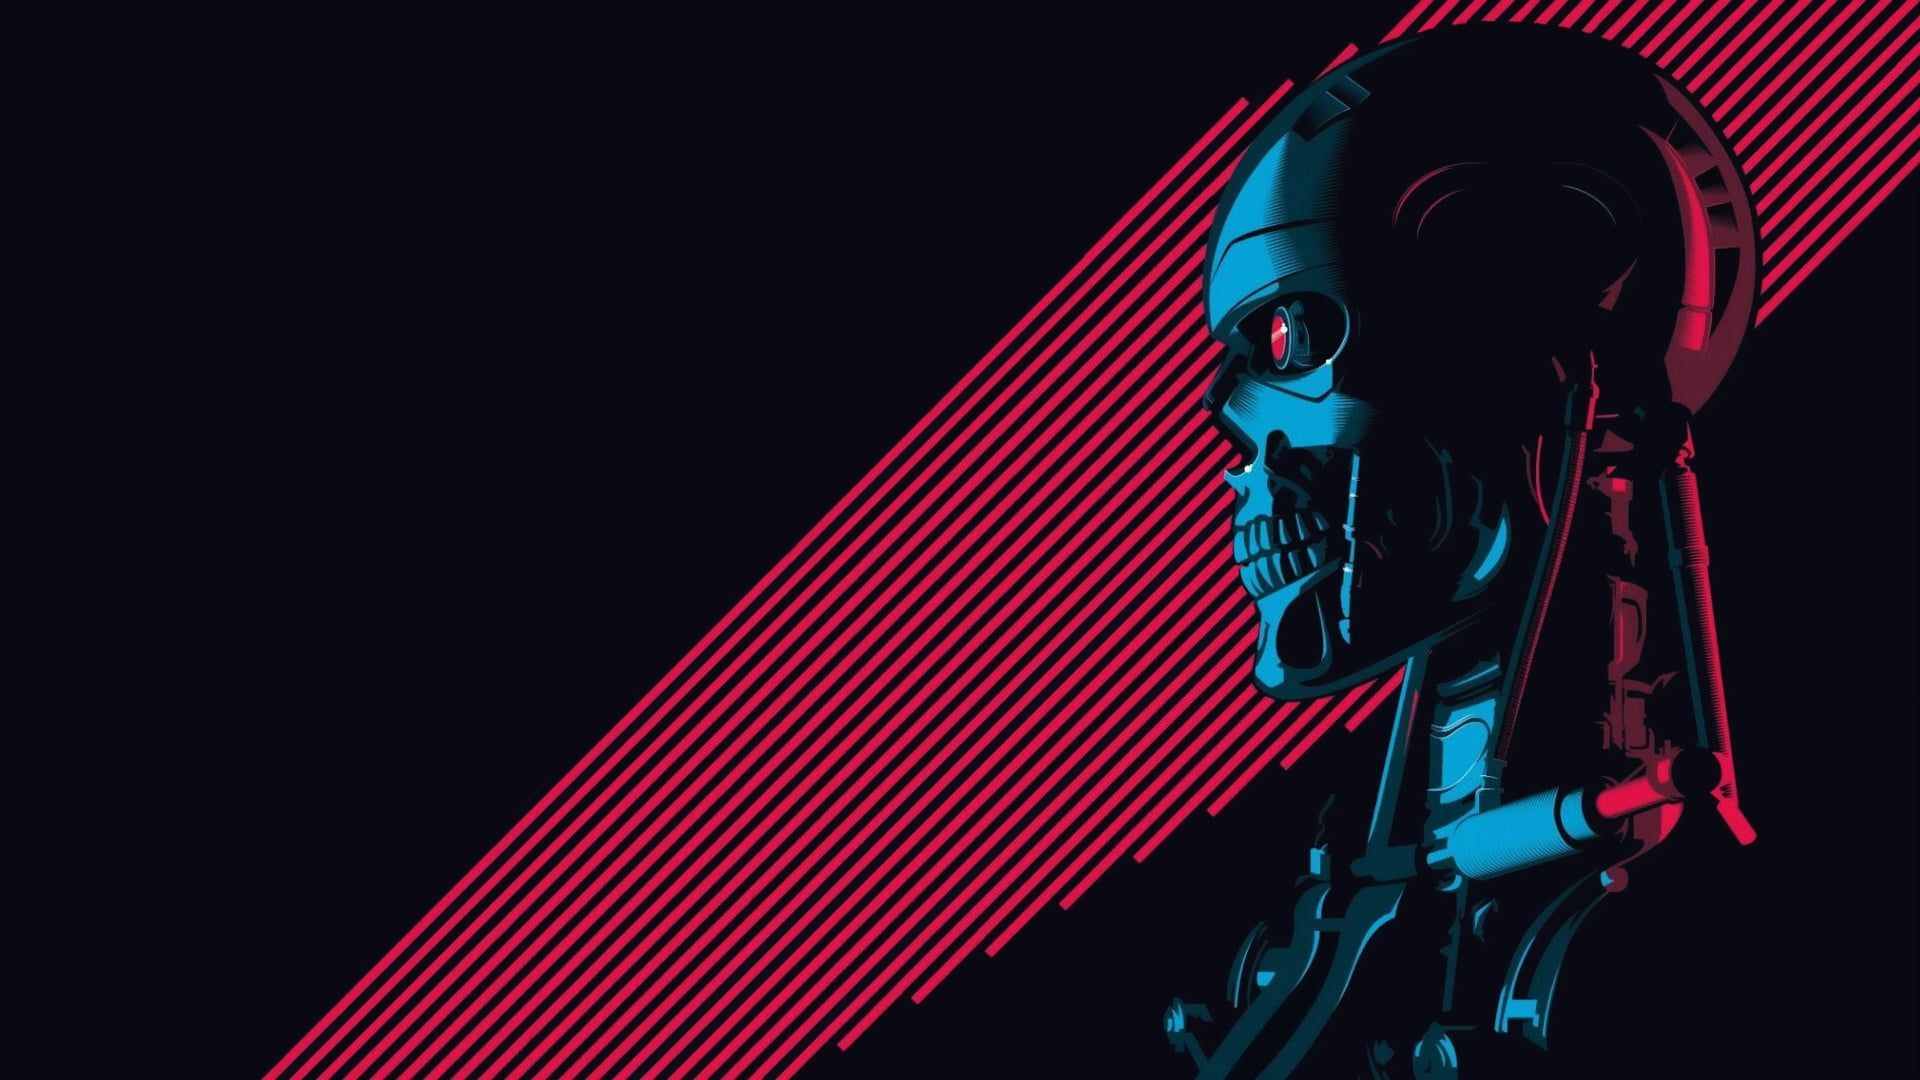 Terminator Illustration #artwork #Terminator #cyborg #movies Science Fiction #skull #T 800 P #wallpaper #hdwallpaper #deskt. Terminator, HD Wallpaper, Cyborg